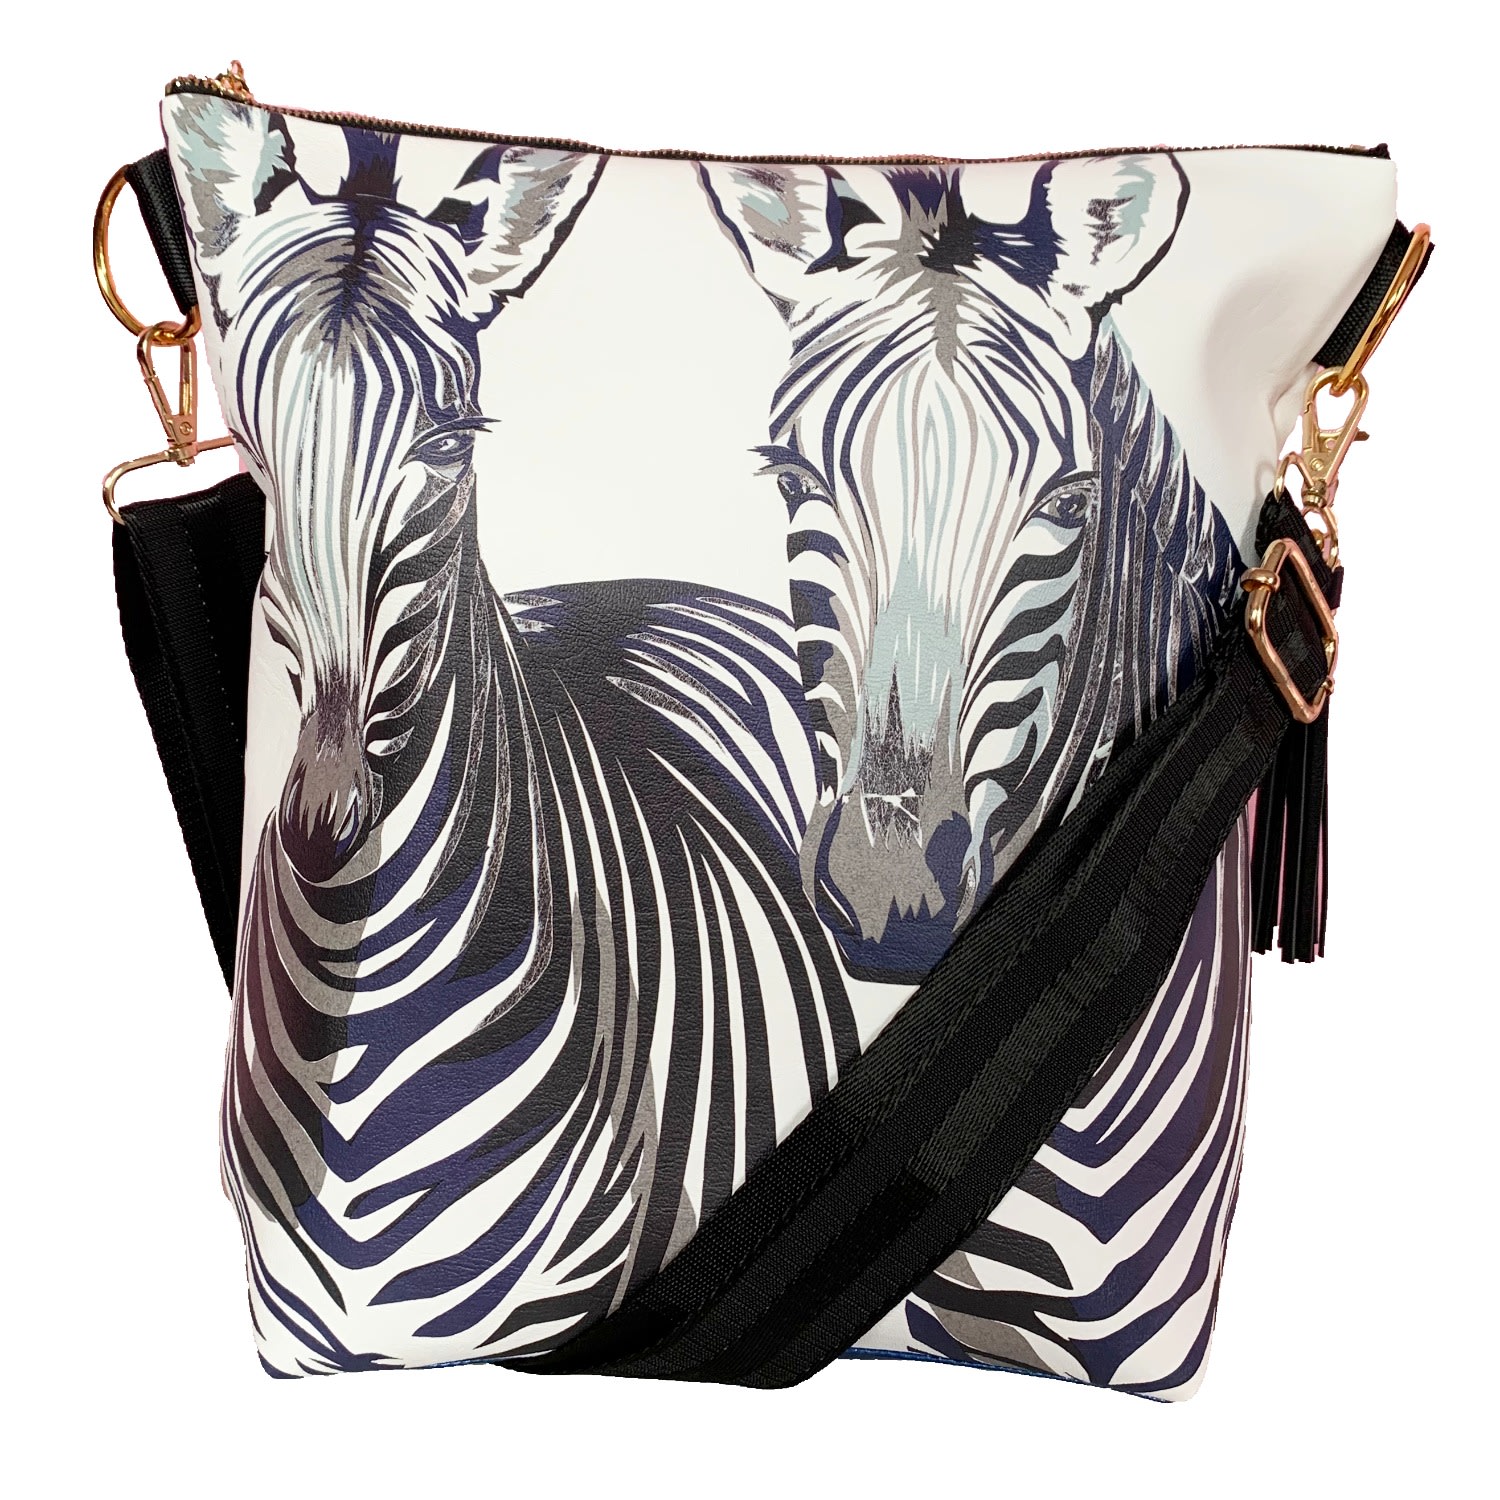 Chloe Croft London Limited - Zebra Vegan Leather Handbag